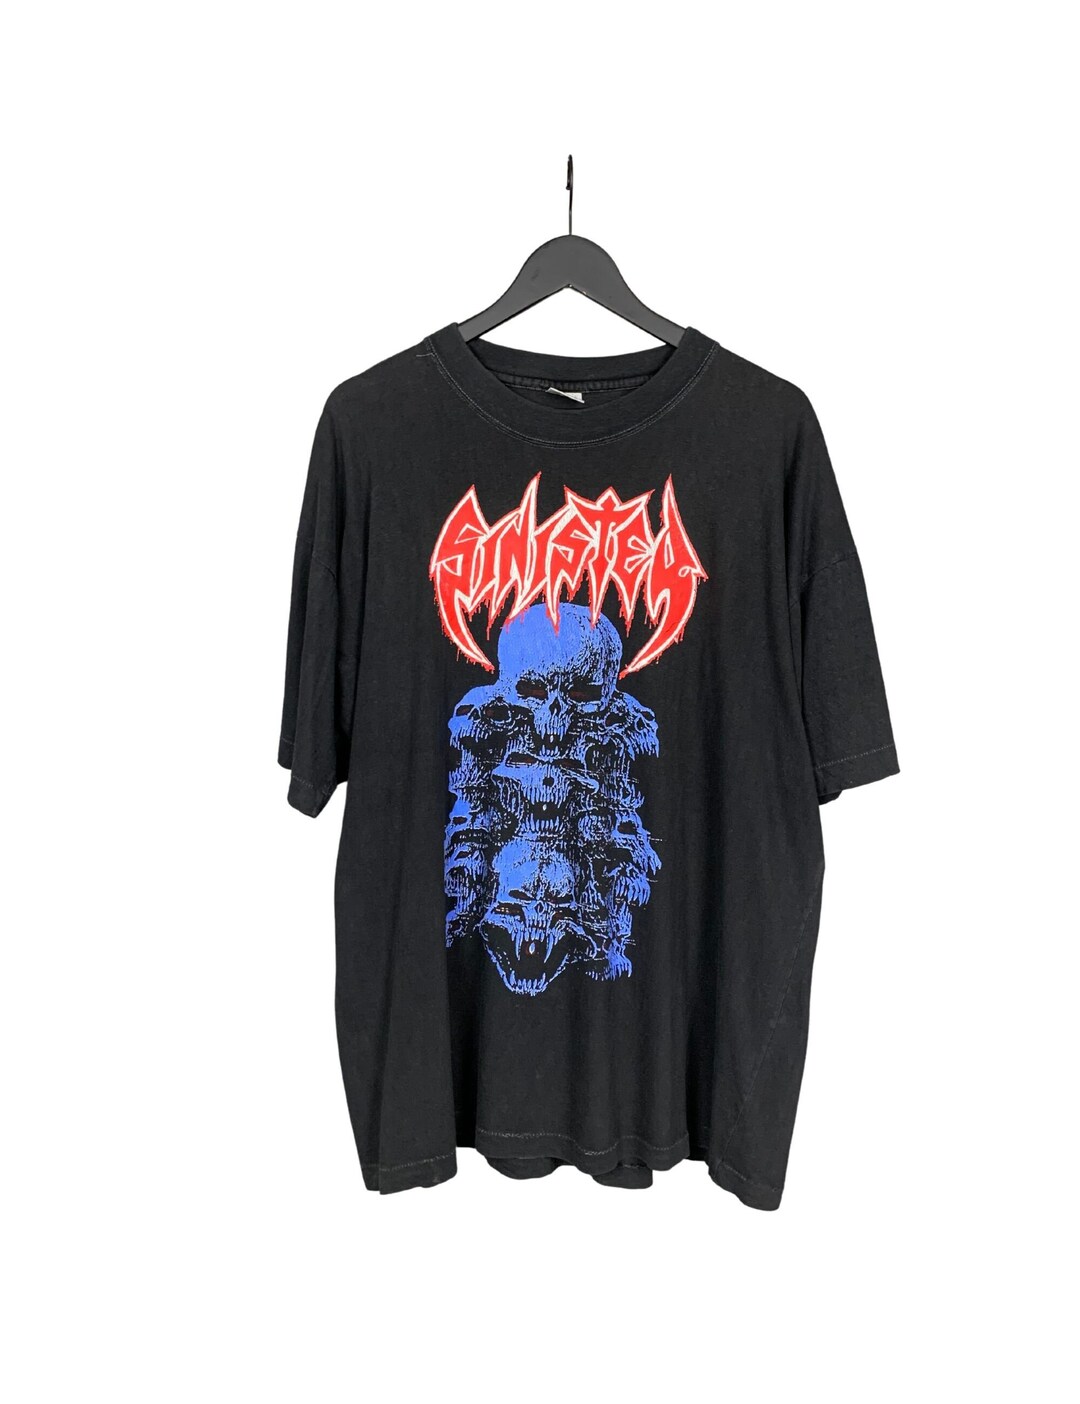 SINISTER 1993 Diabolical Summoning T-shirt / Cannibal Corpse / - Etsy